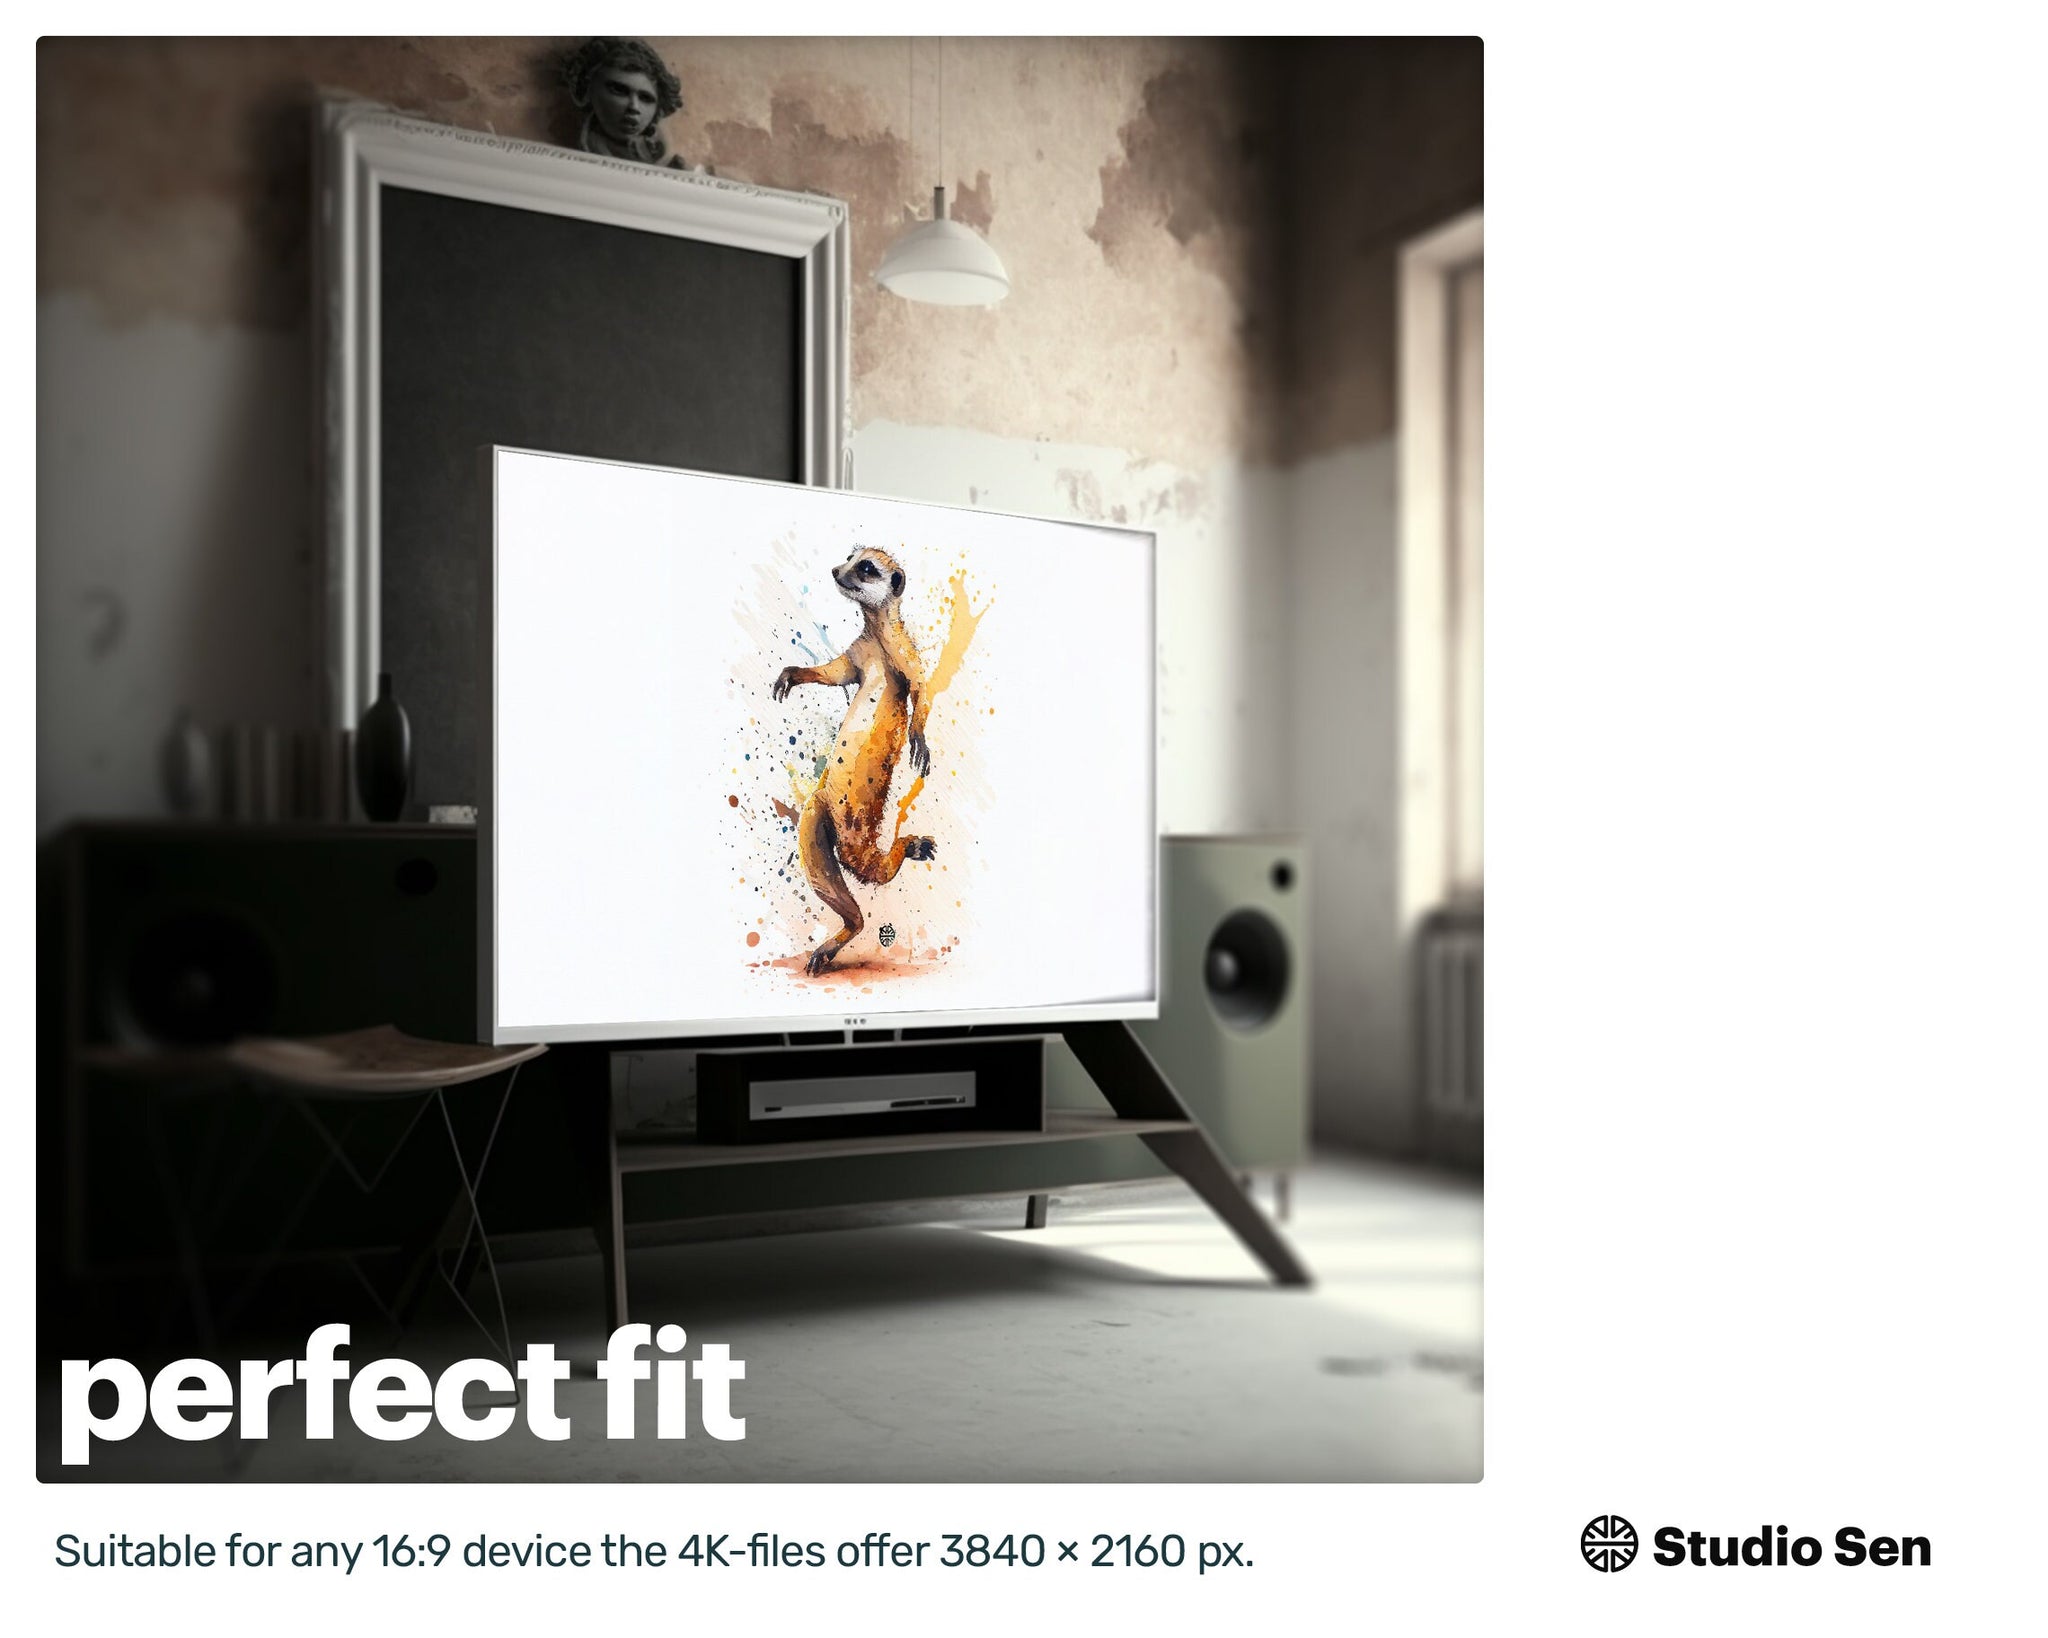 Samsung Art TV, Happy Meerkat, premium download, drops and splashes, friendly wallpaper, art for kids